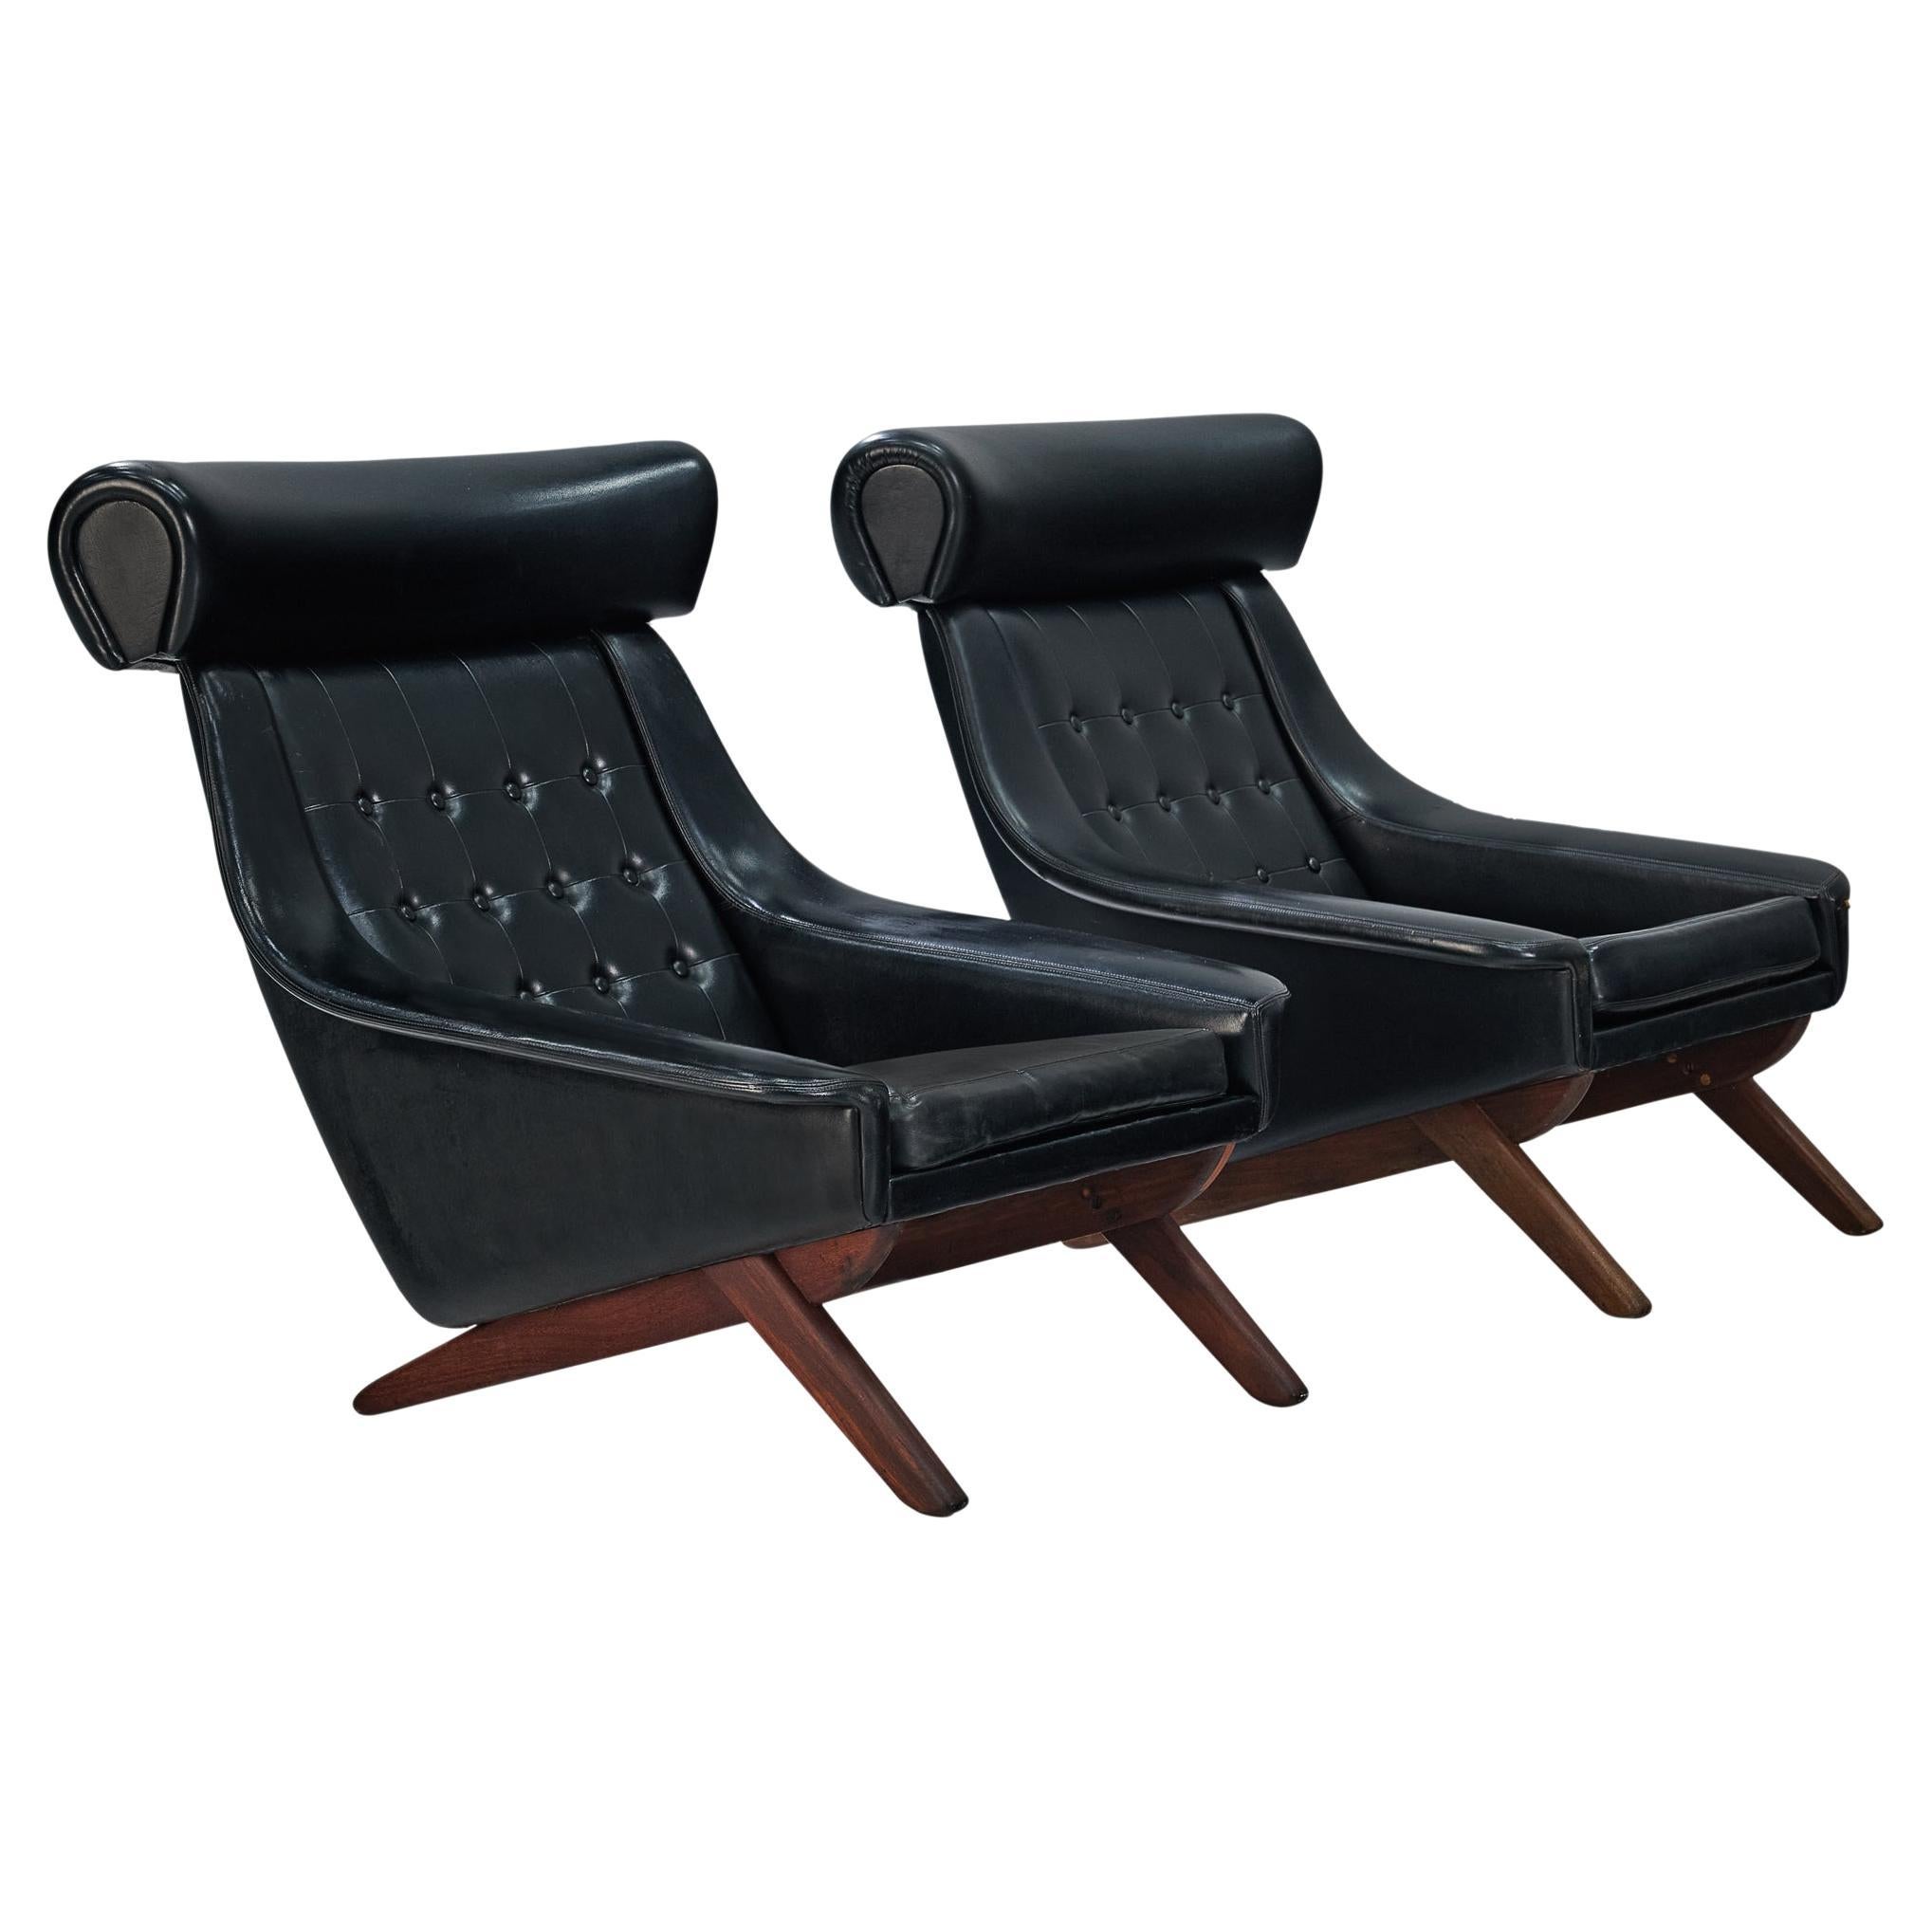  Illum Wikkelsø Pair of Easy Chairs in Black Upholstery and Teak 